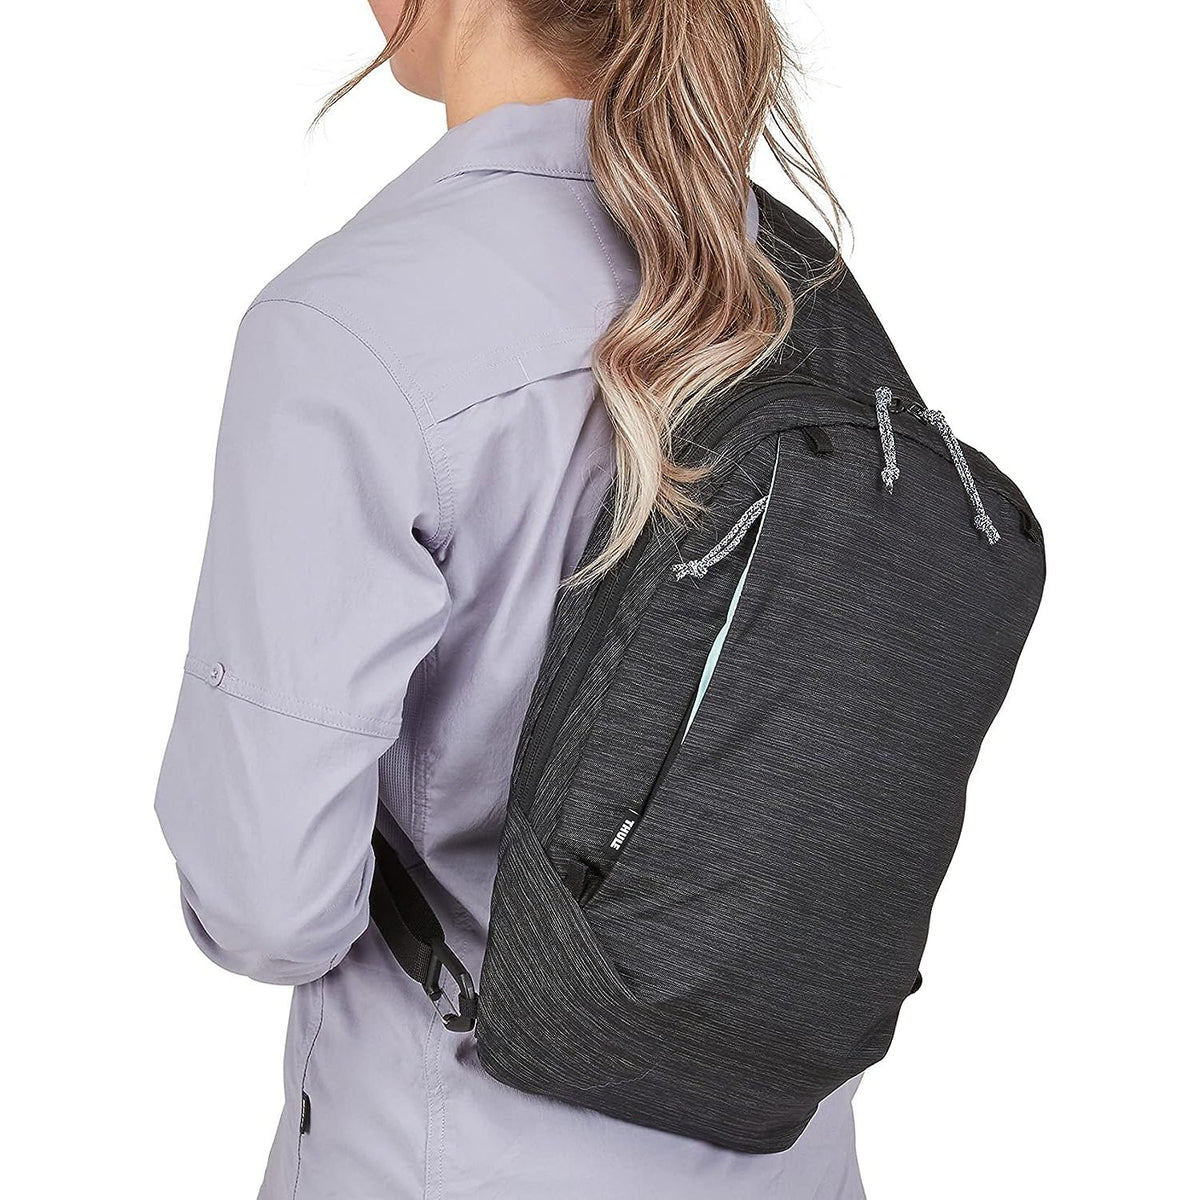 Thule Sapling Backpack